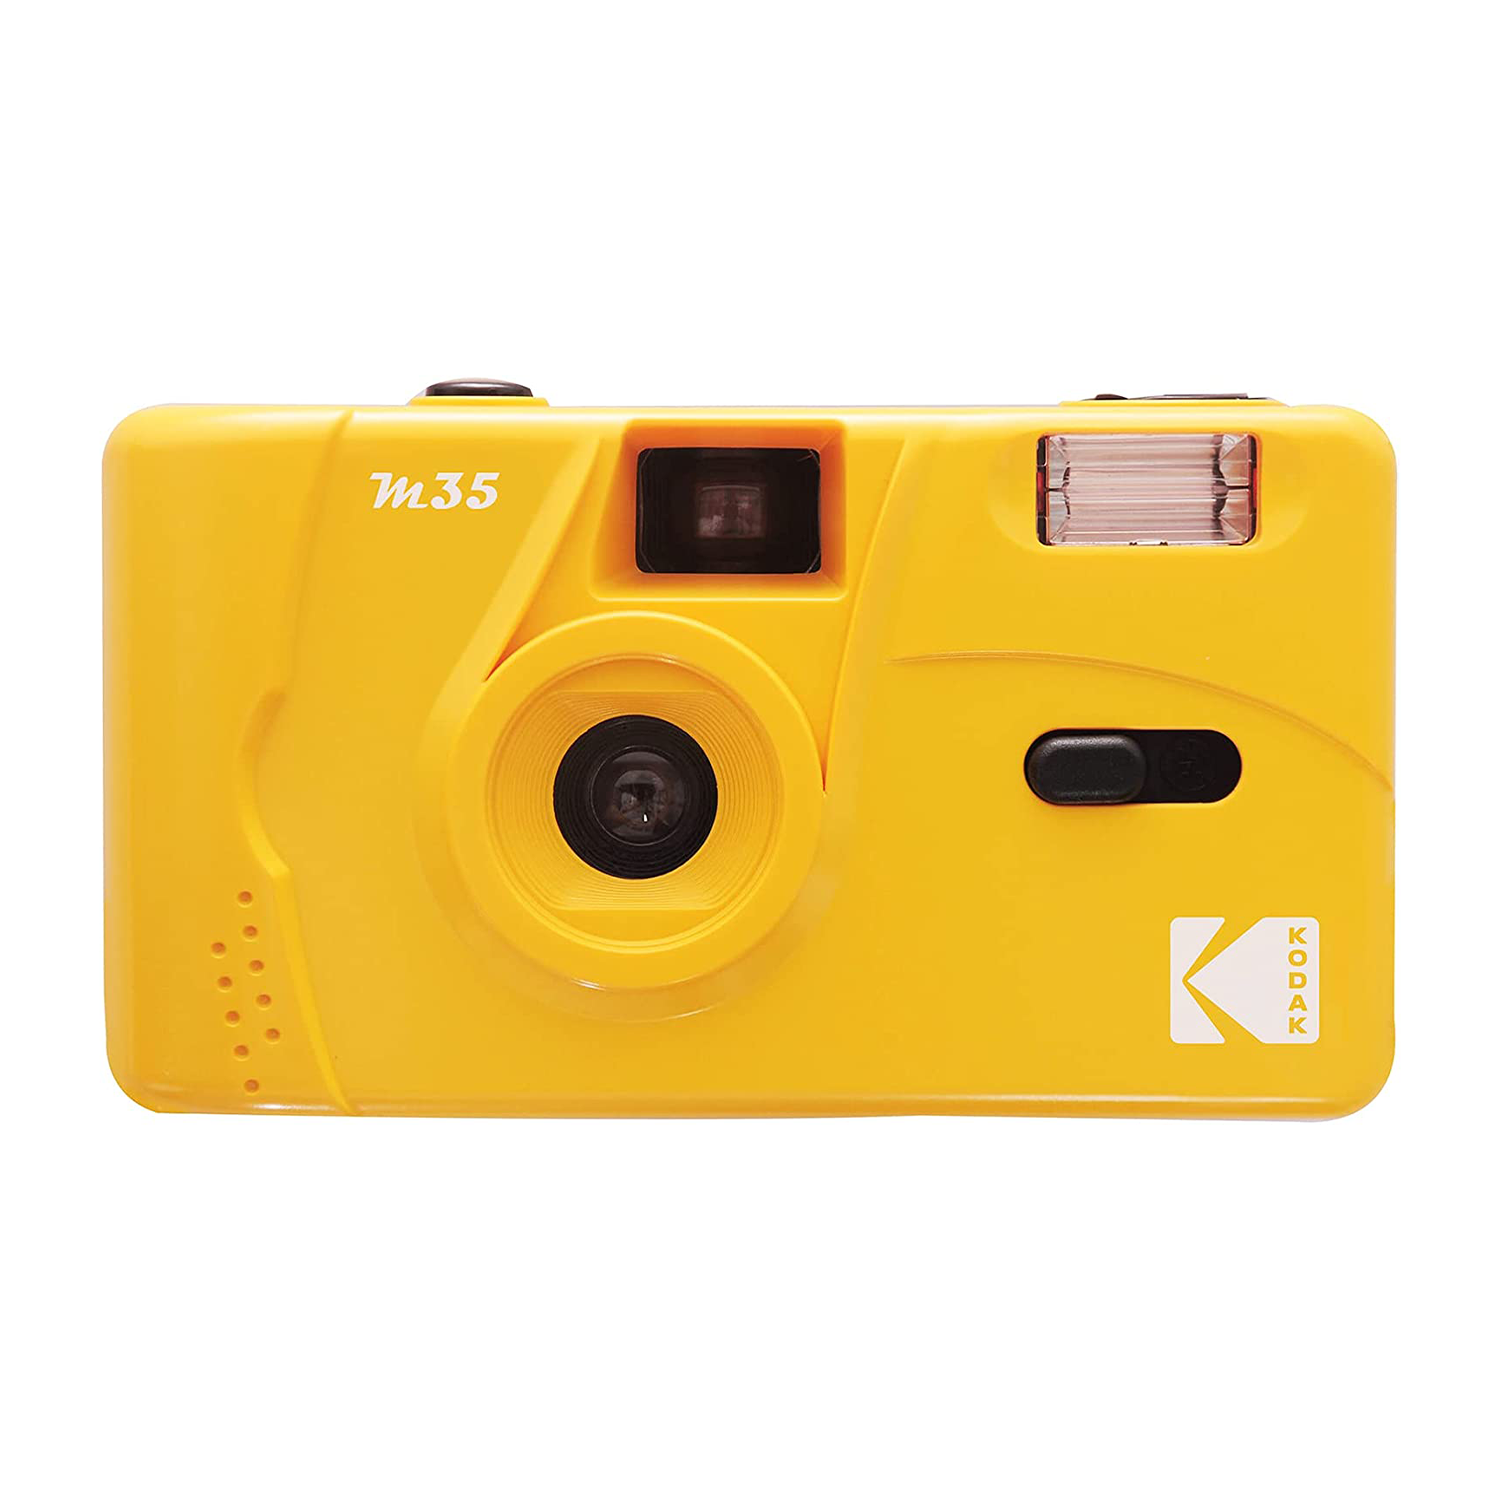 Yellow Kodak film camera